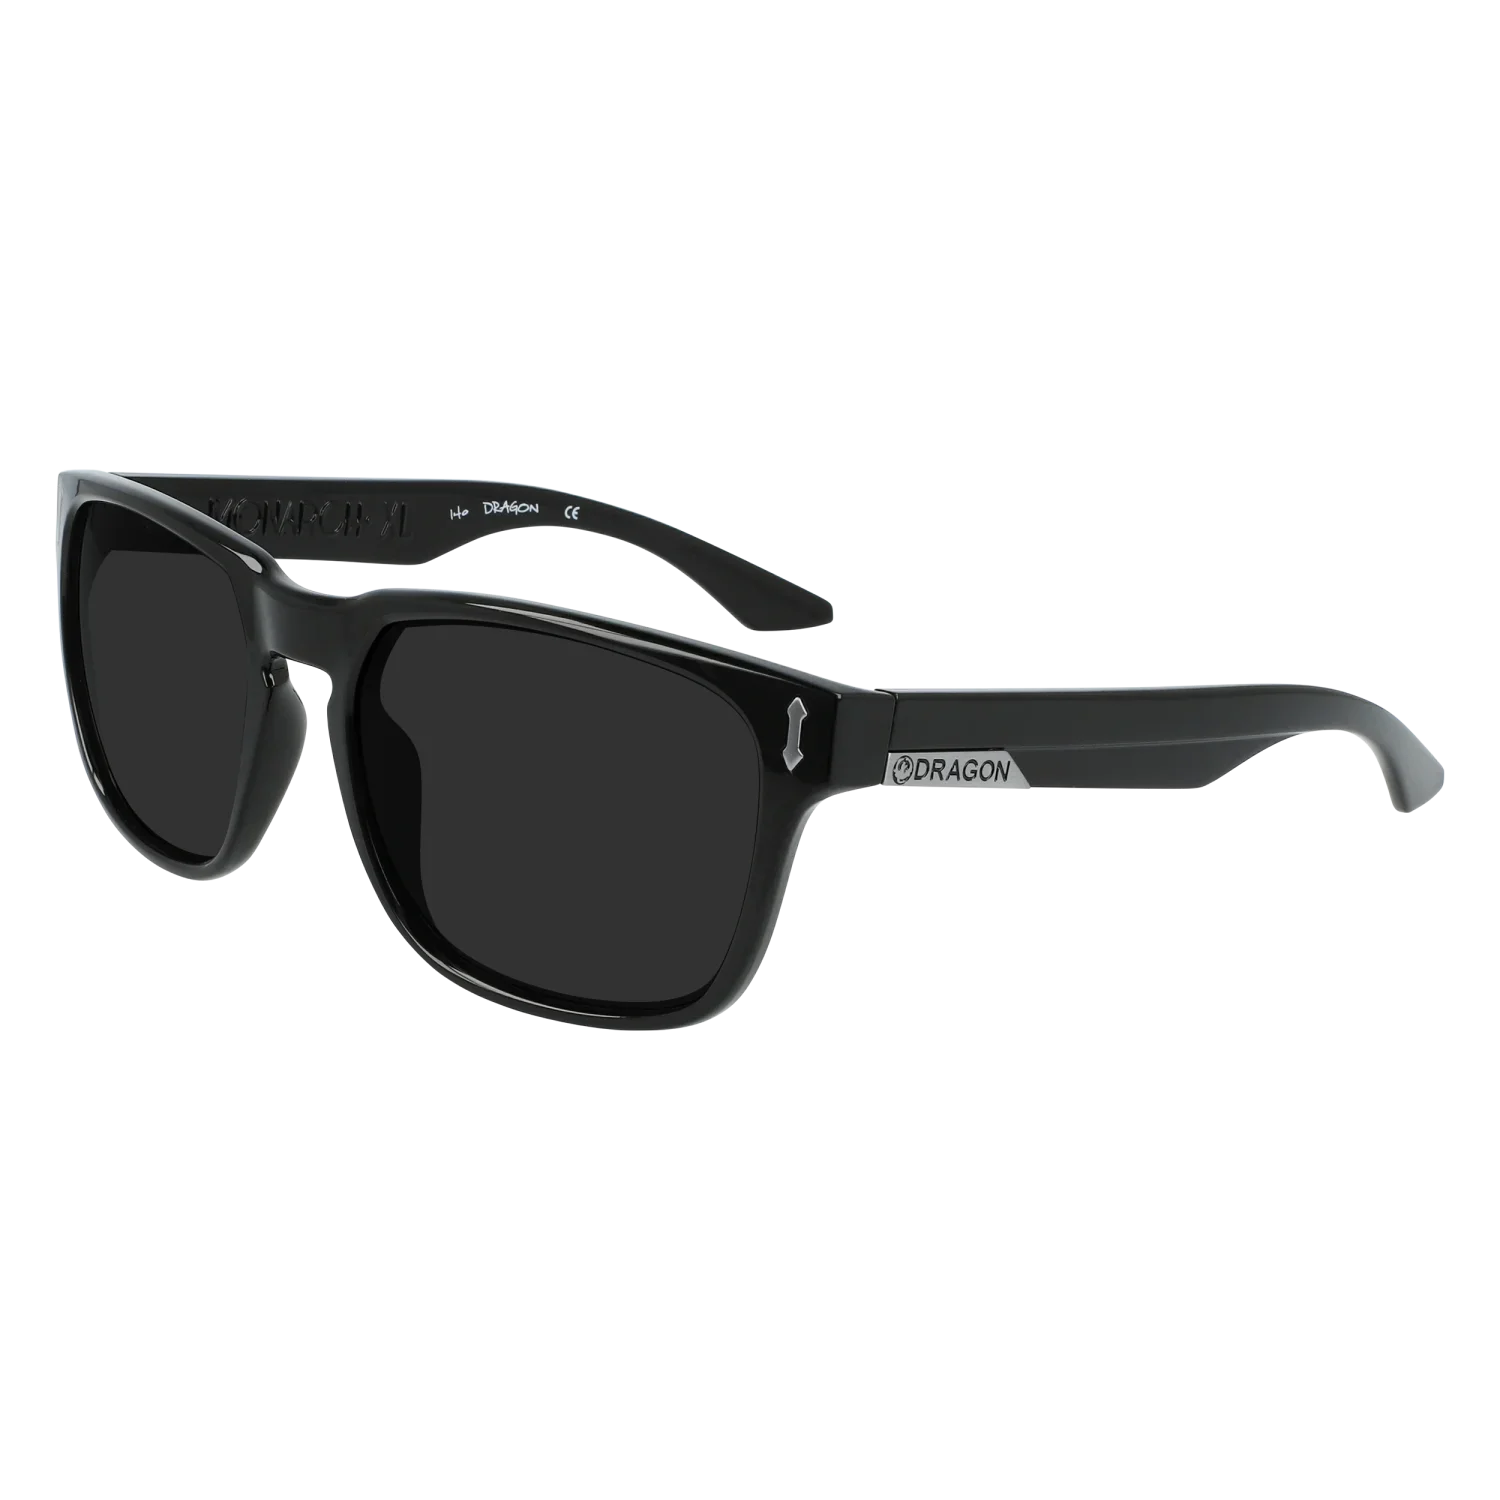 'Dragon Monarch XL Performance Polar LumaLens Sunglasses' in 'Jet W/ Lumalens Smoke Polar' colour